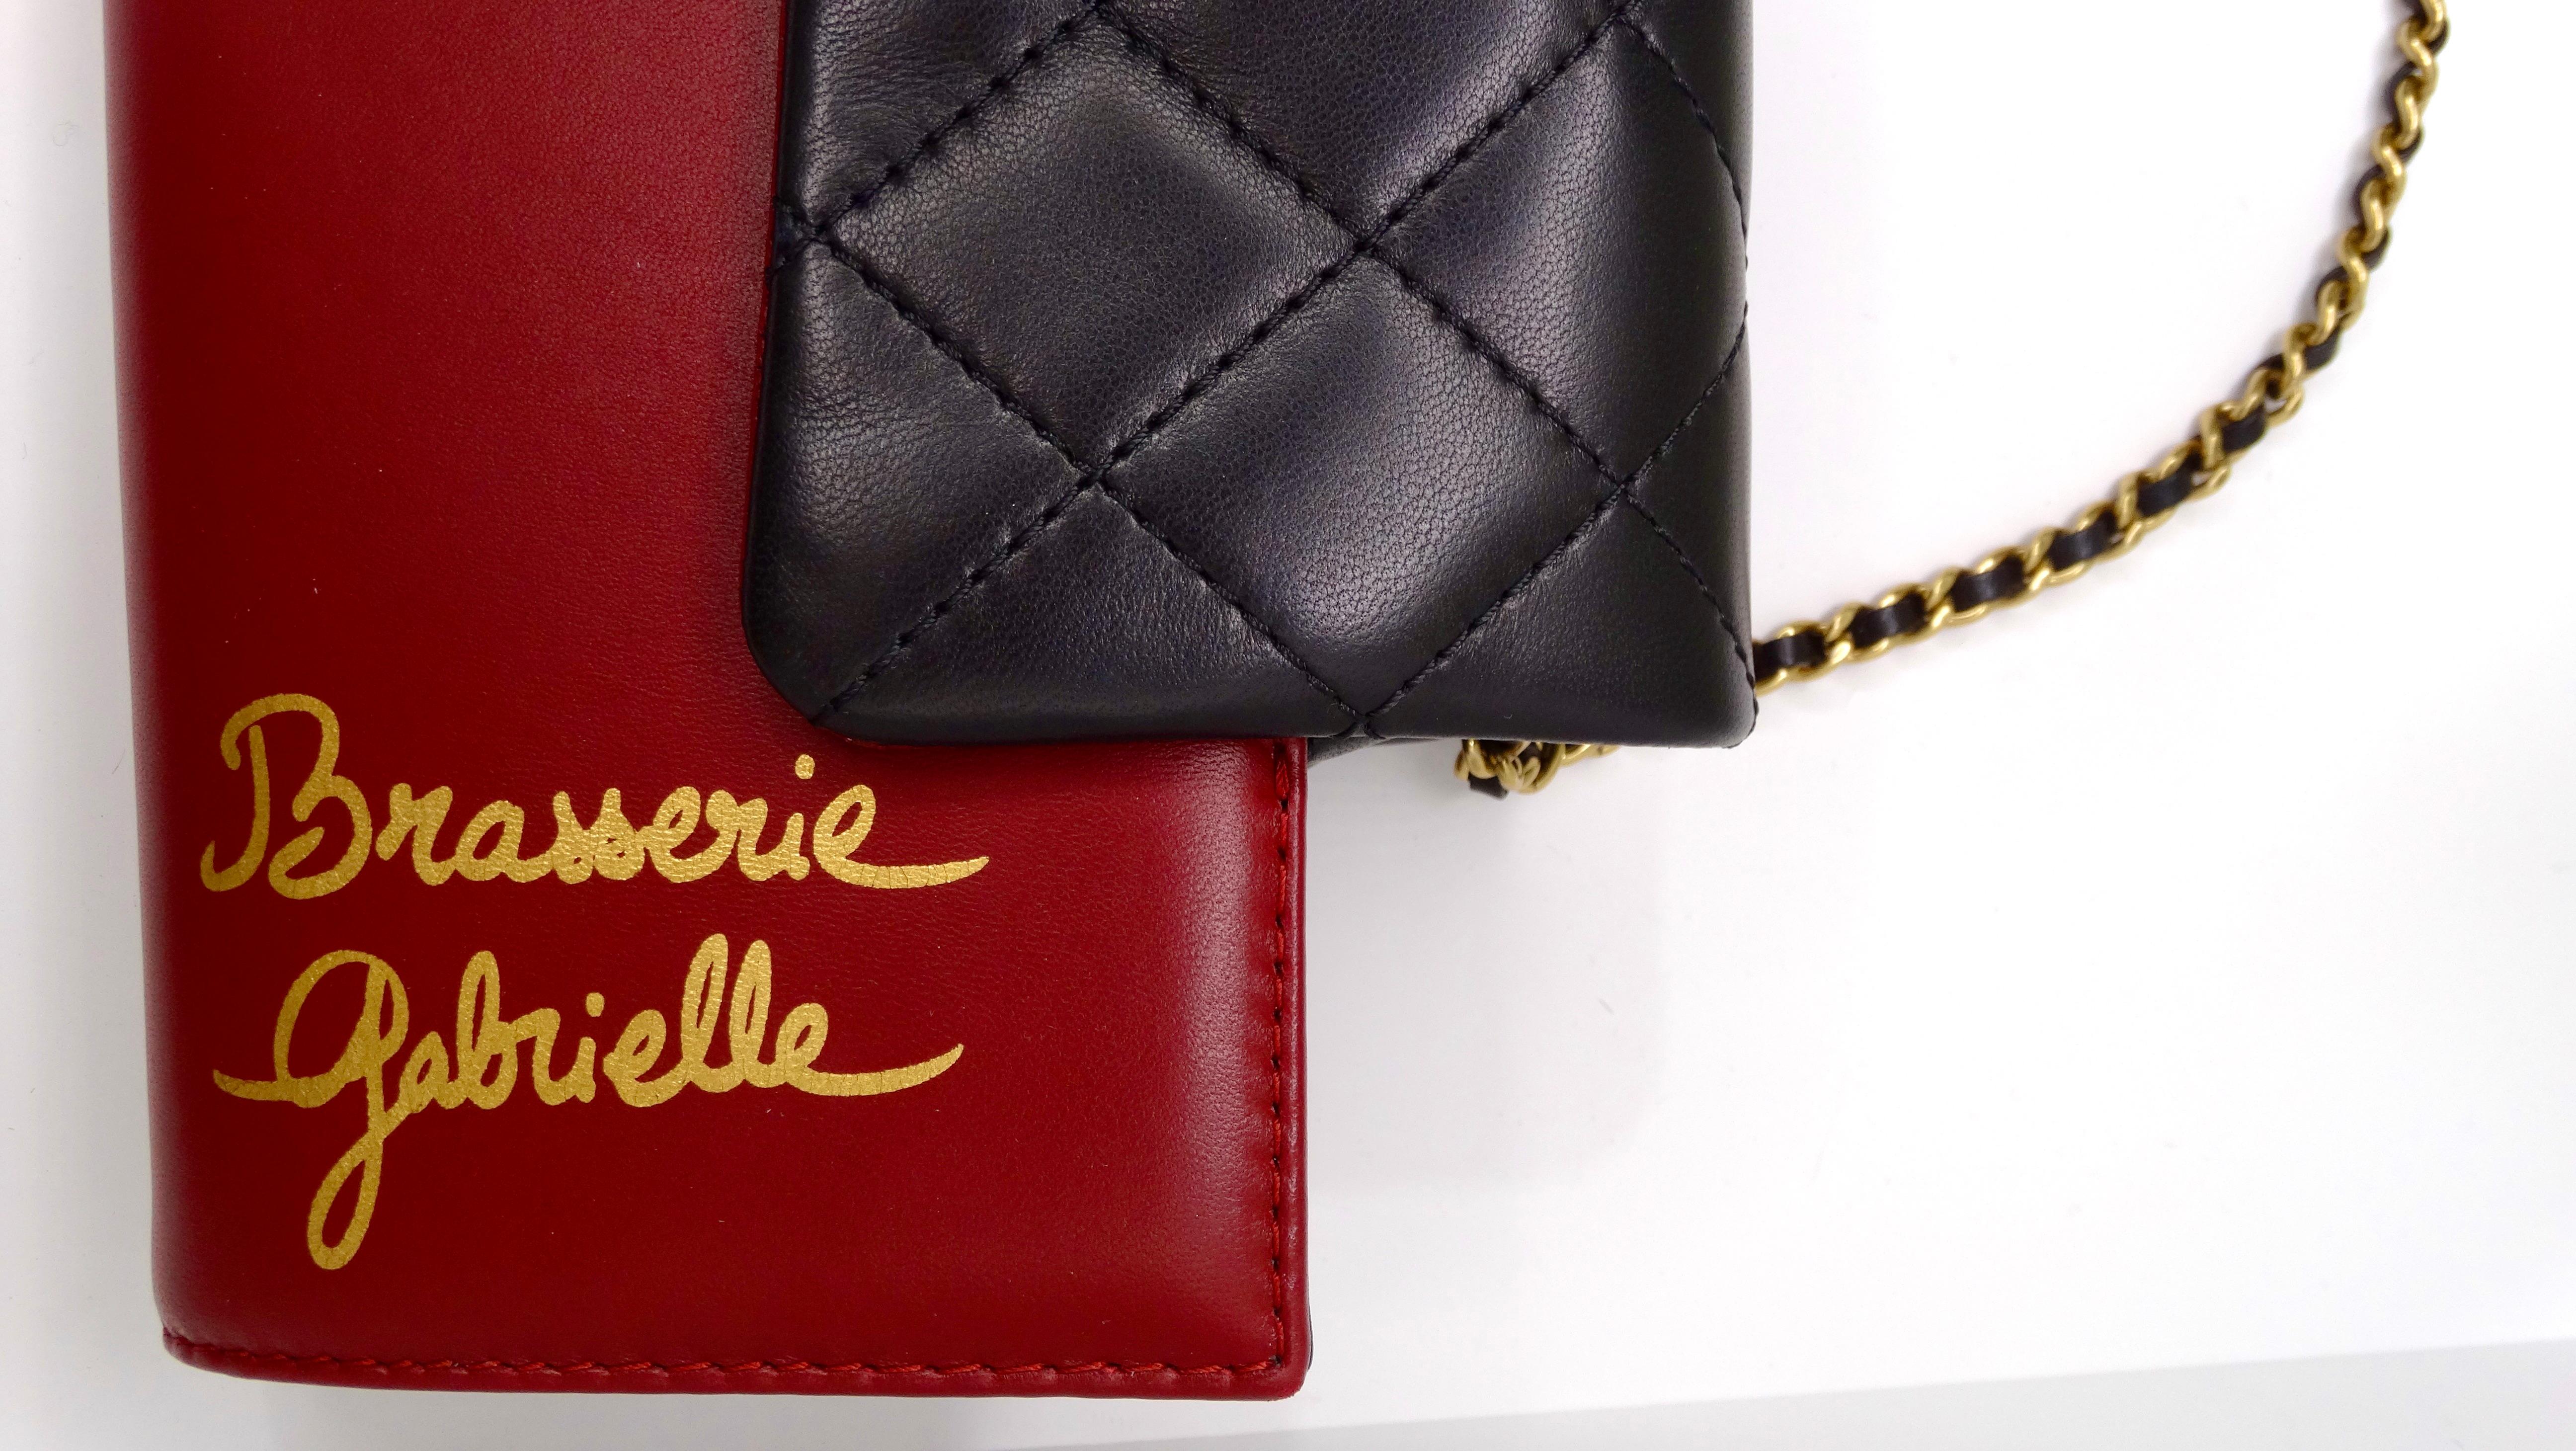 Brown Chanel Limited Edition 'Brasserie Gabrielle' Shoulder Bag